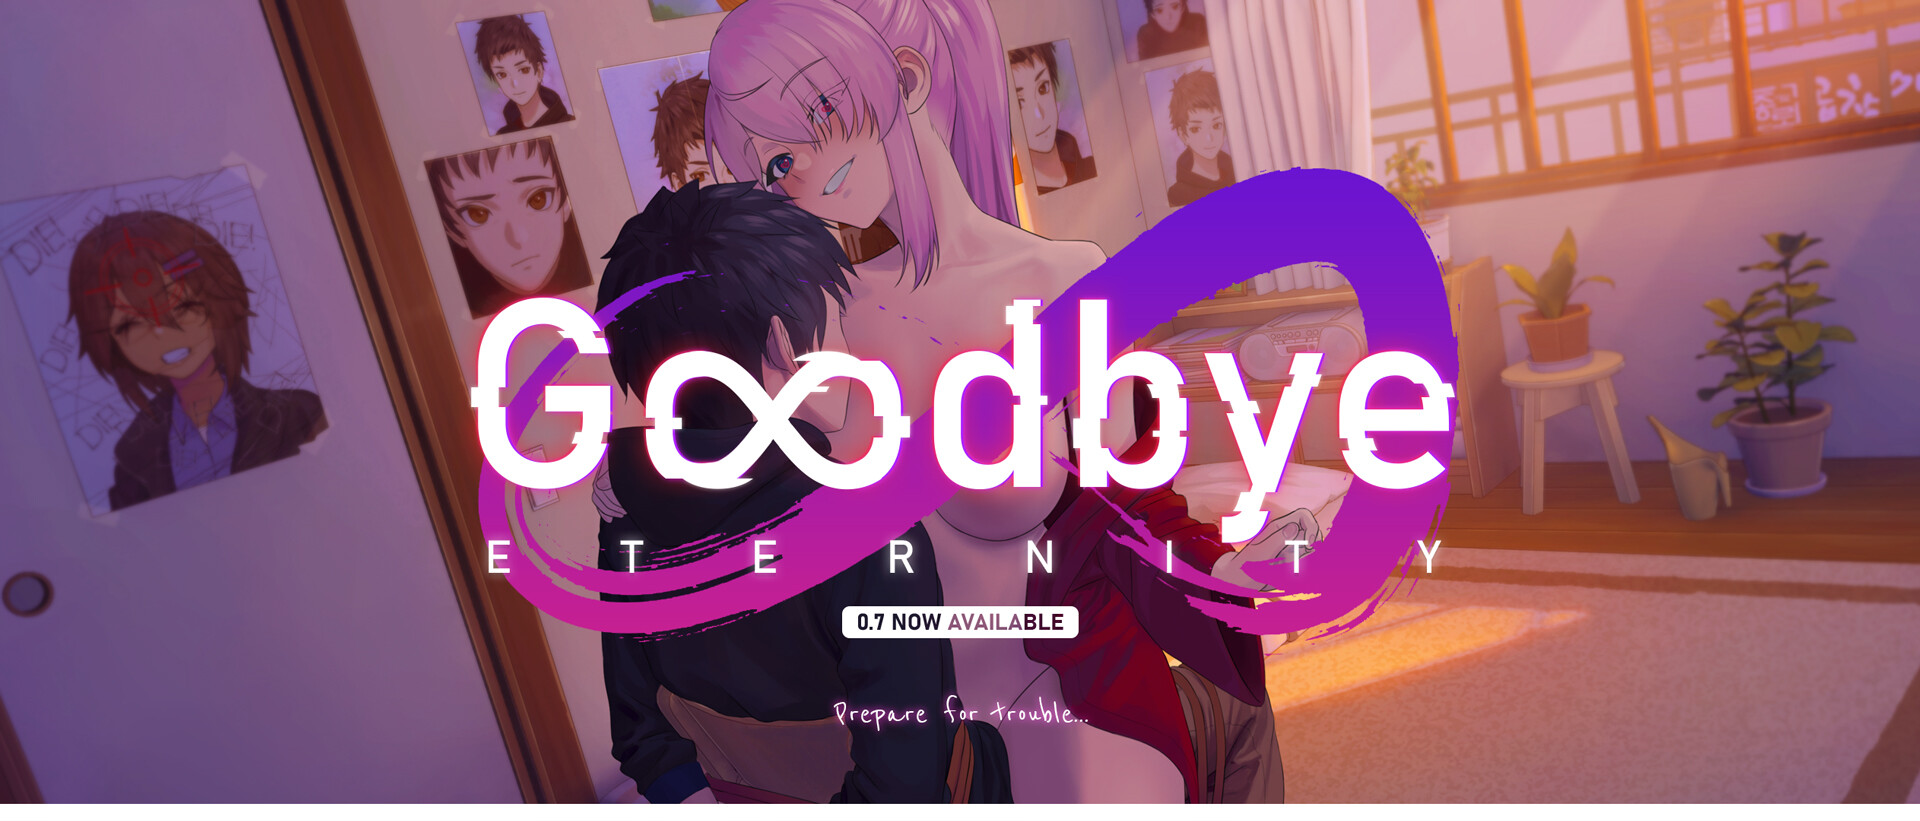 Goodbye Eternity Main Image